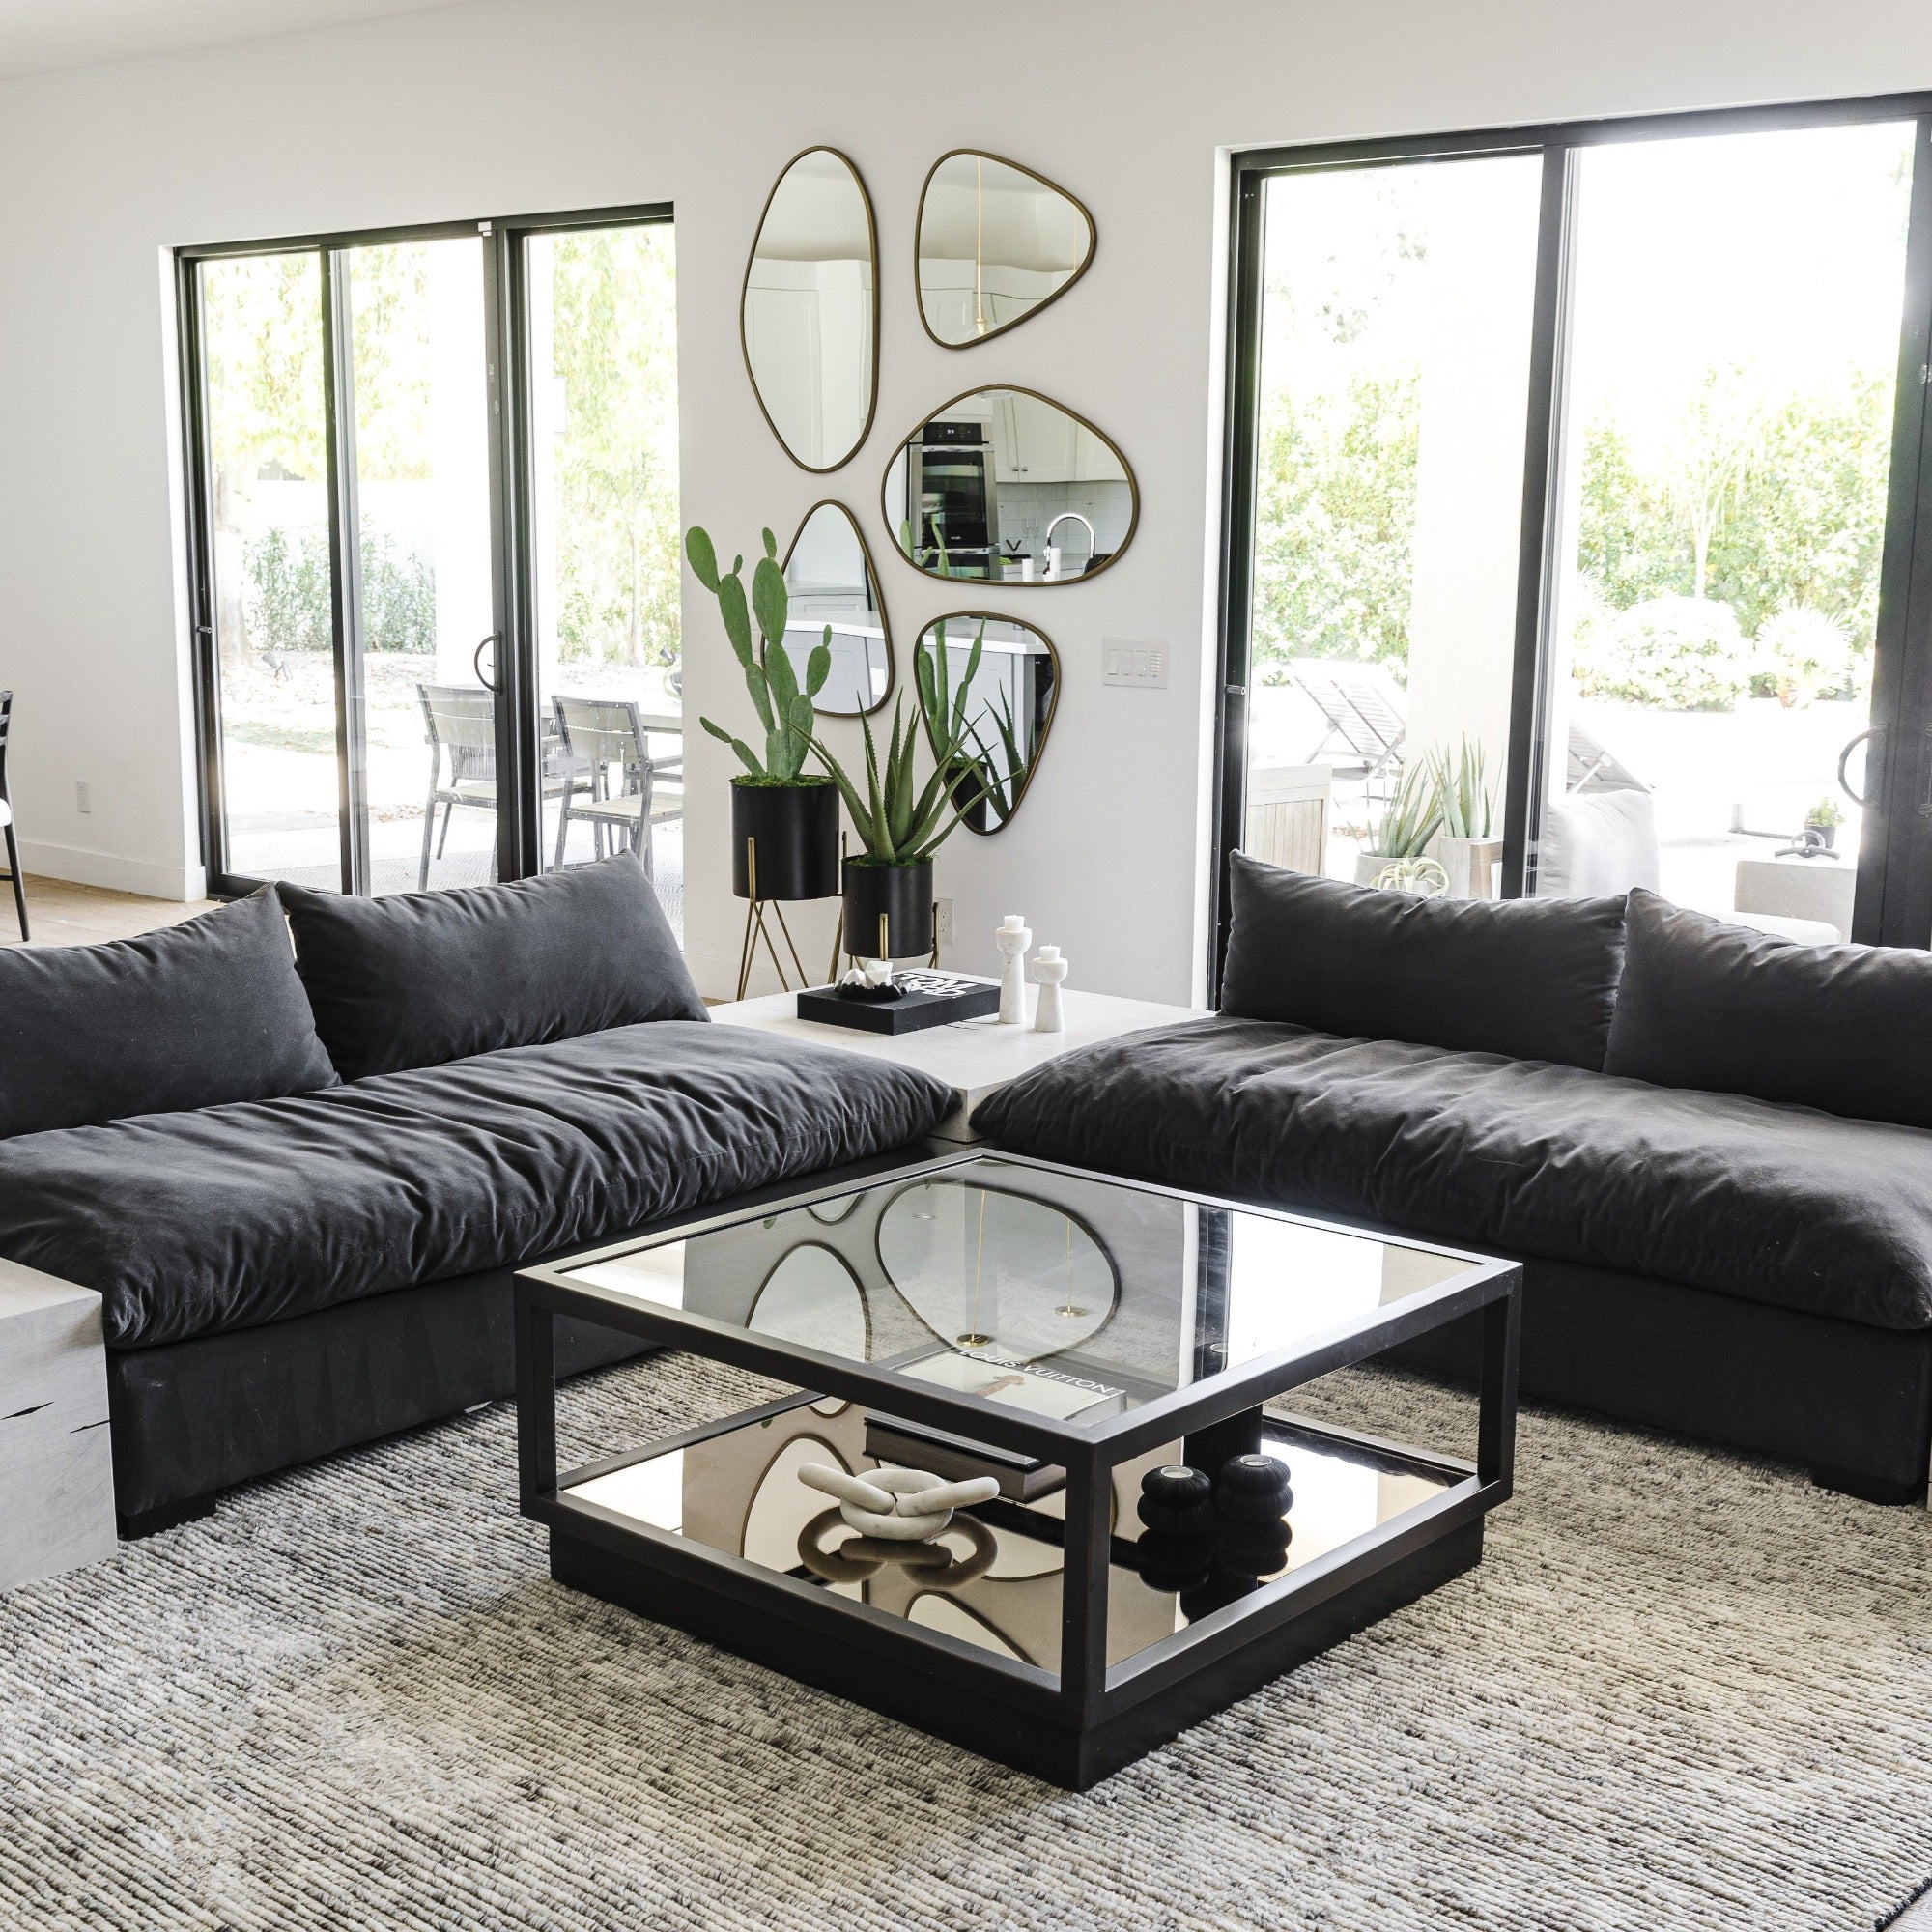 Brinley Mirror - StyleMeGHD - Modern Home Decor